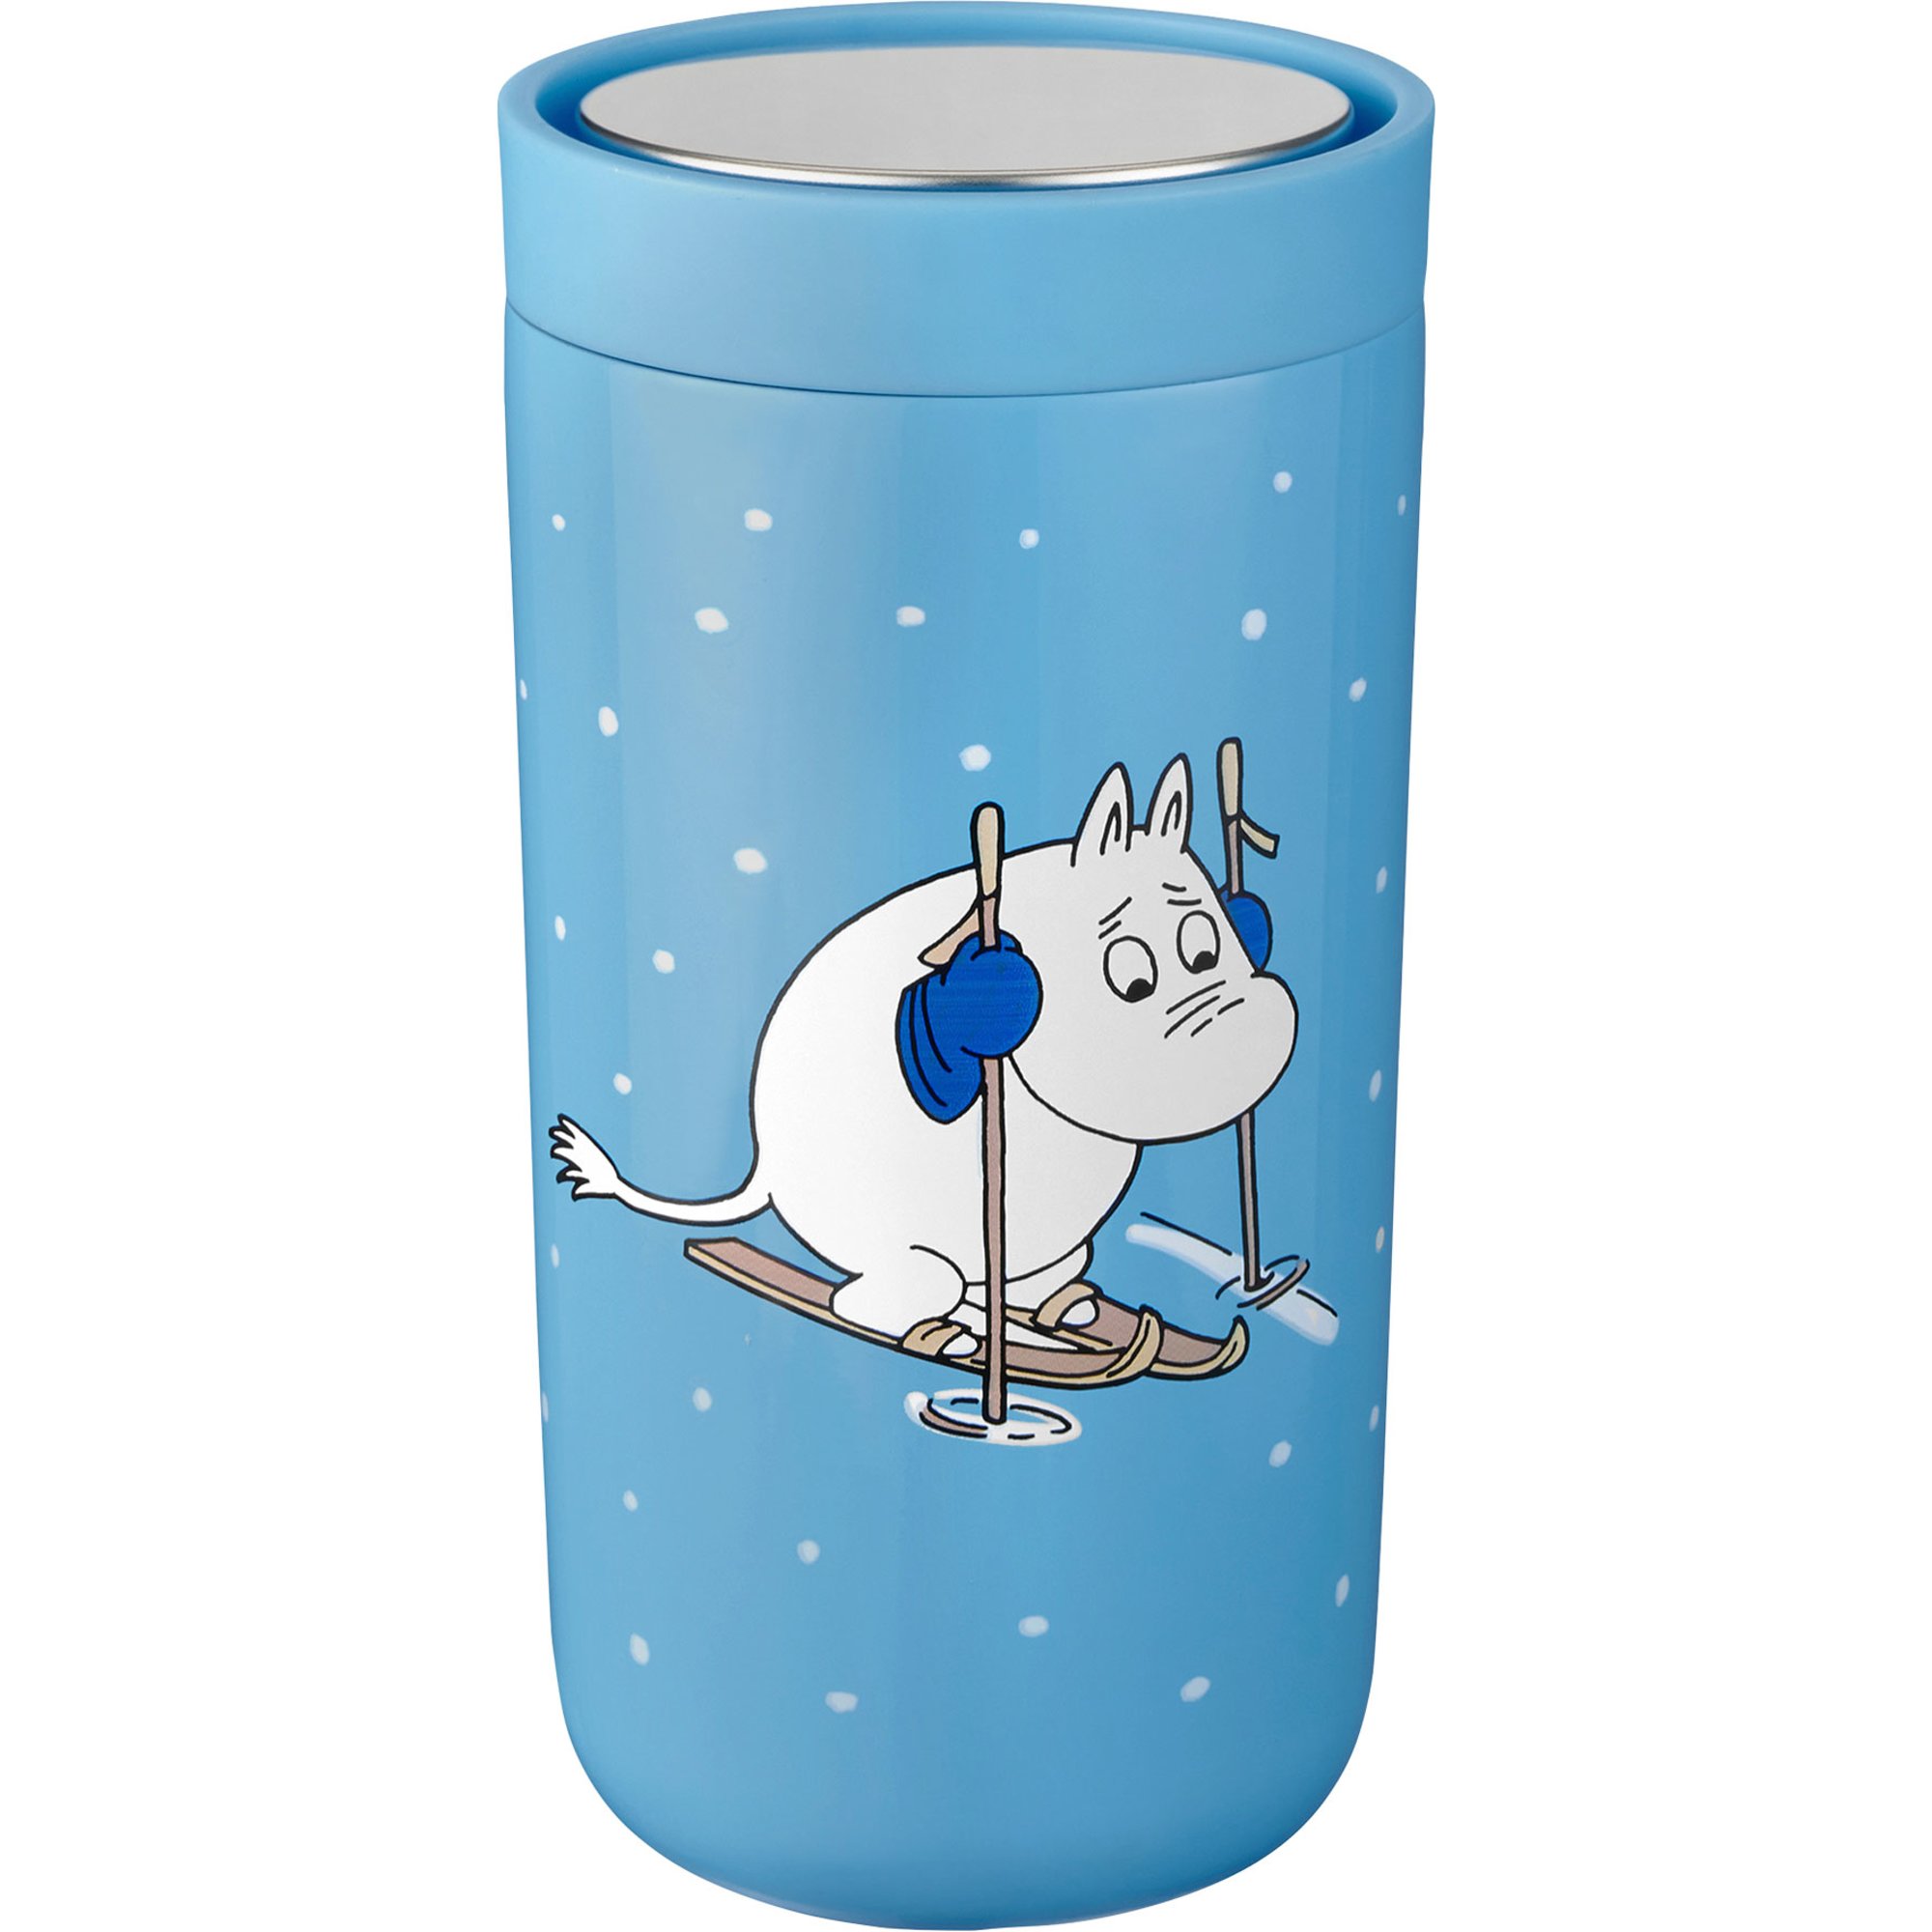 Stelton To Go Click termosmugg 0,2 liter, Moomin skiing